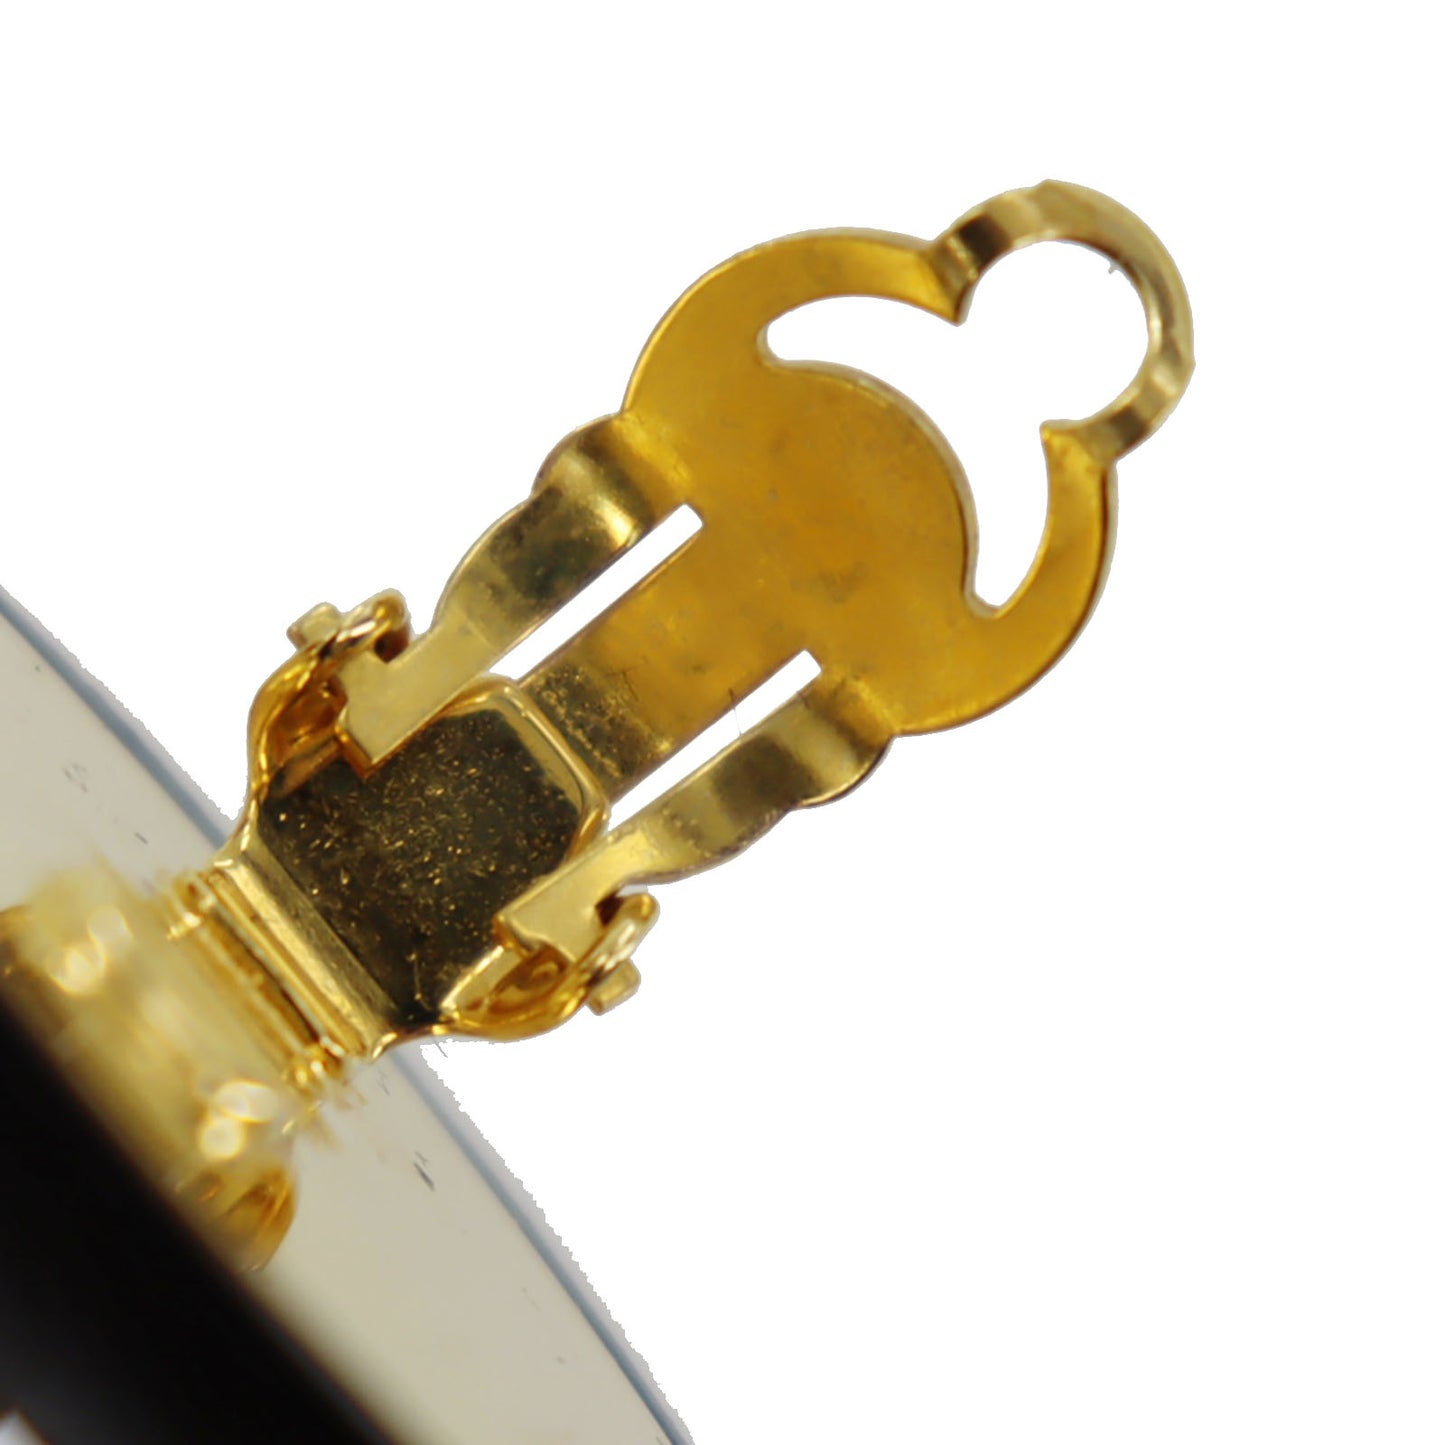 CHANEL Logos Earrings Black Gold Clip-On 93A #BZ804